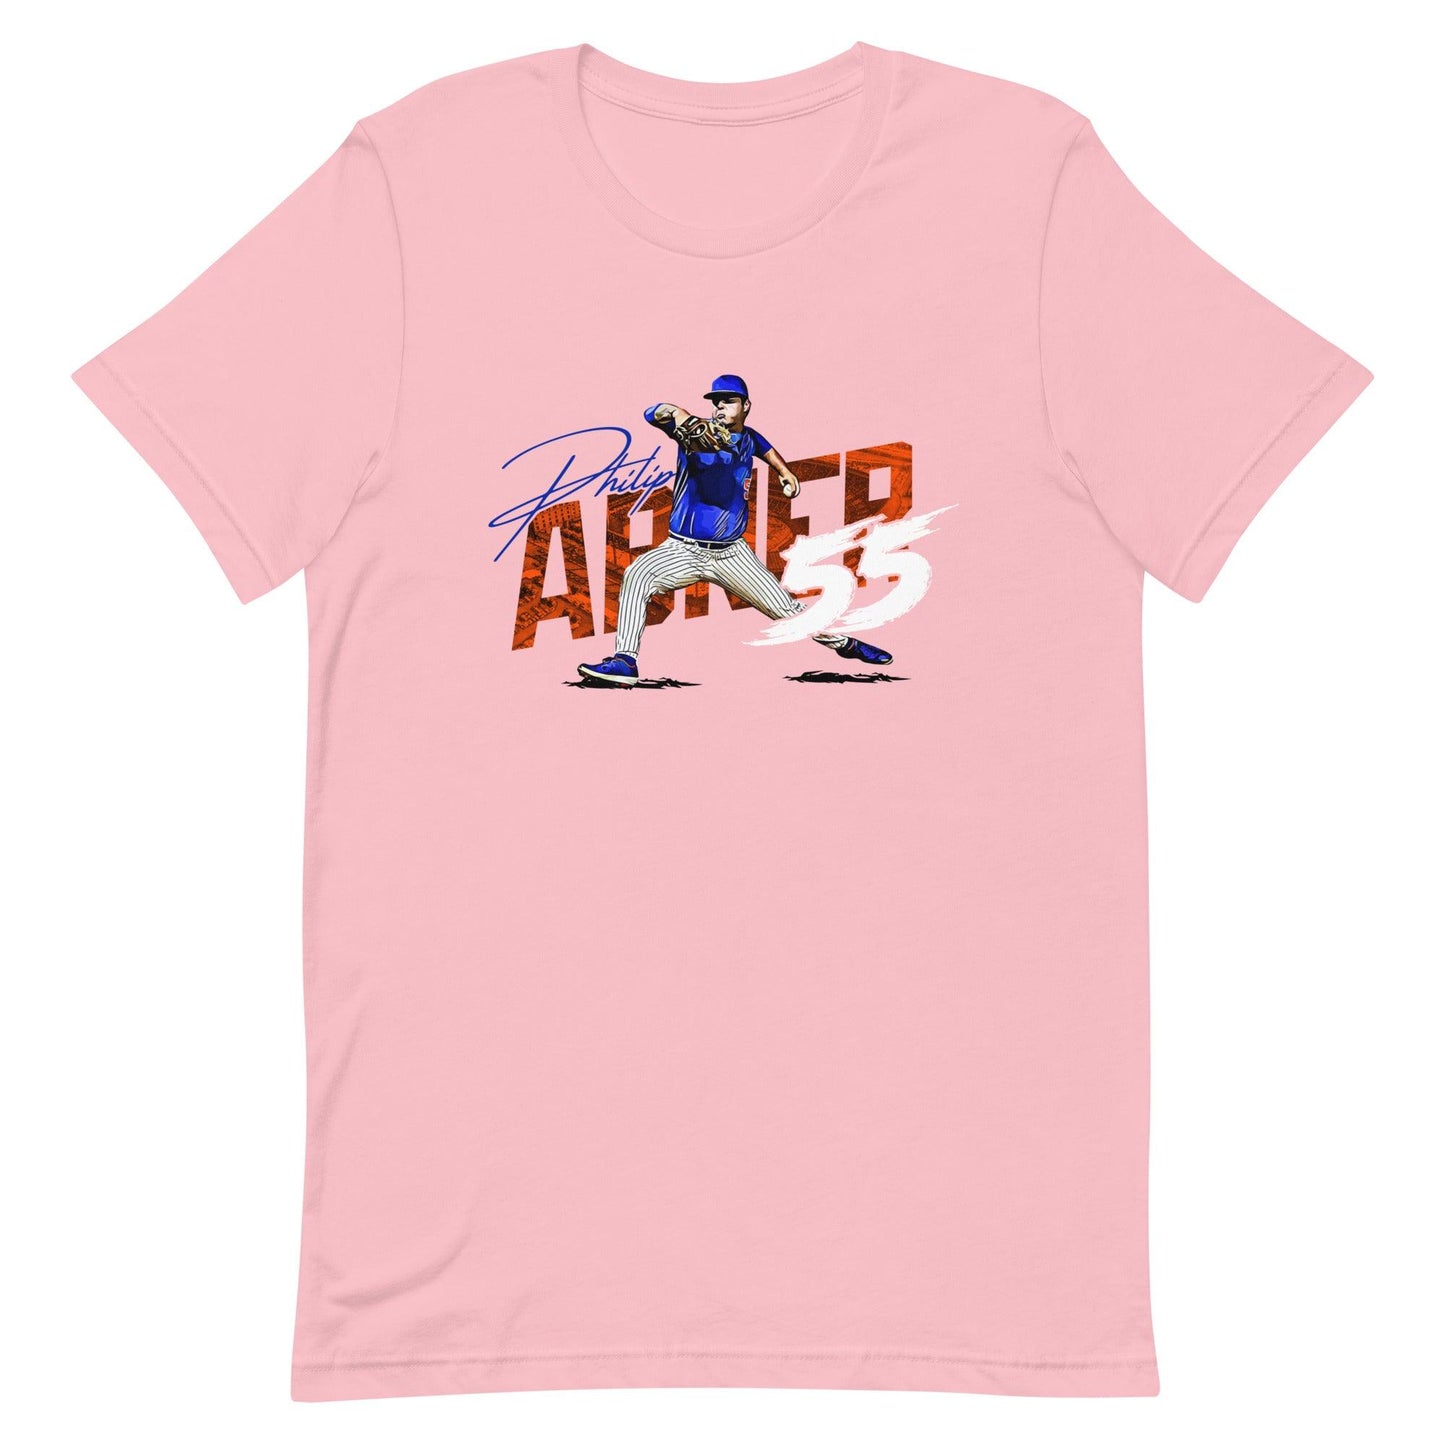 Philip Abner “Gameday” t-shirt - Fan Arch